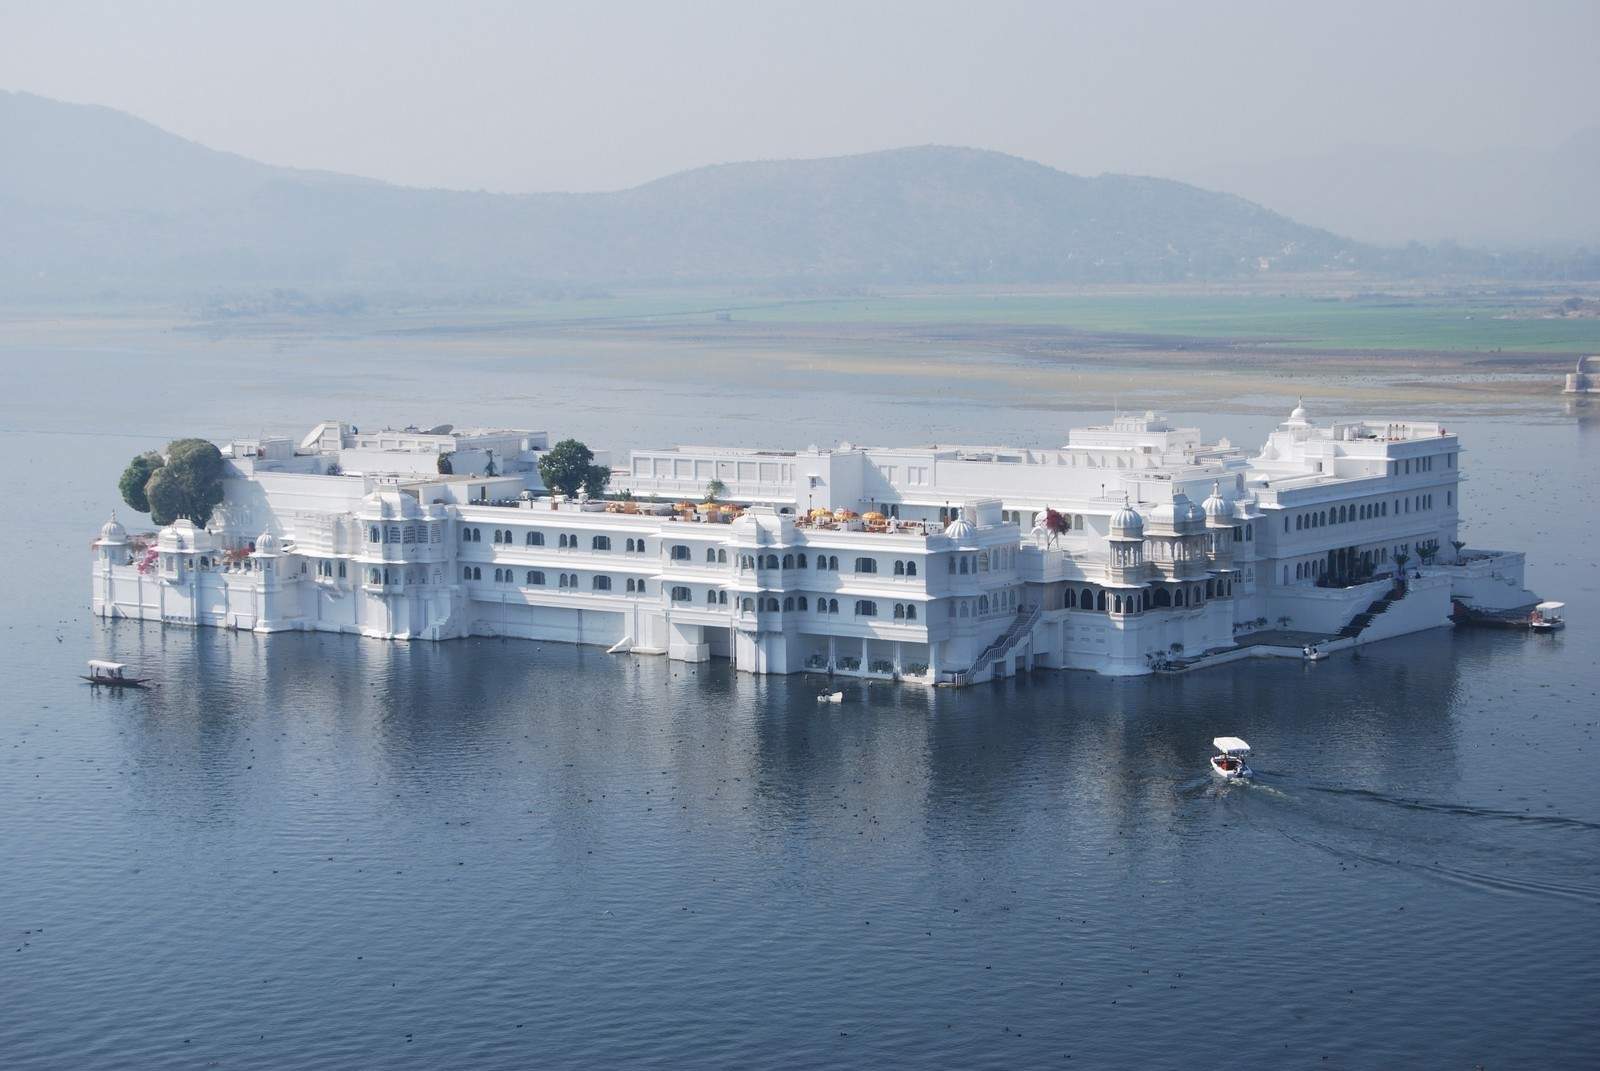 Taj Lake Palace Located on the Jag Niwas Island